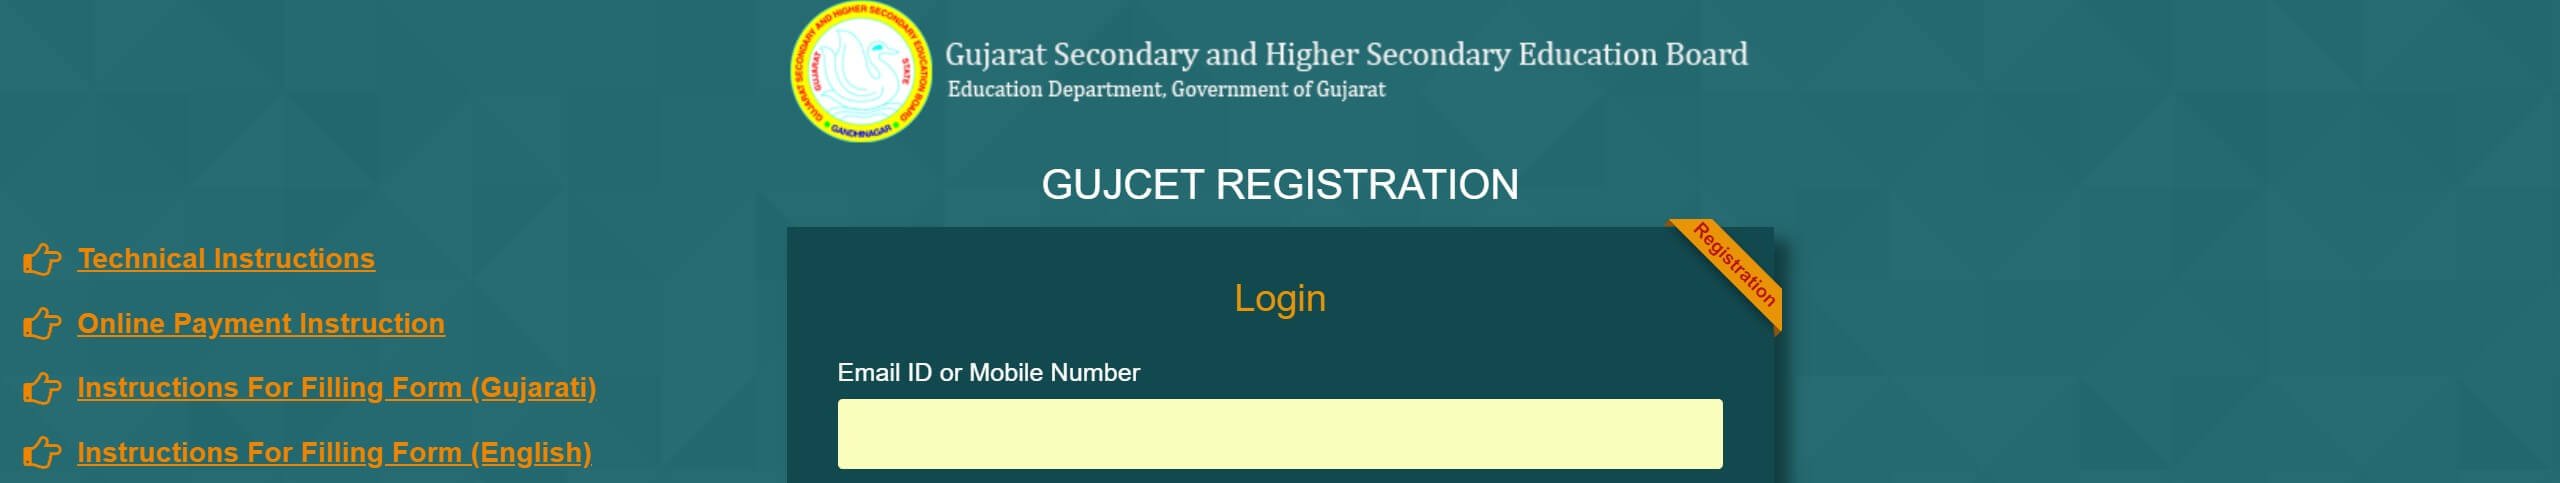 GUJCET 2020 Registrations Started Screenshot